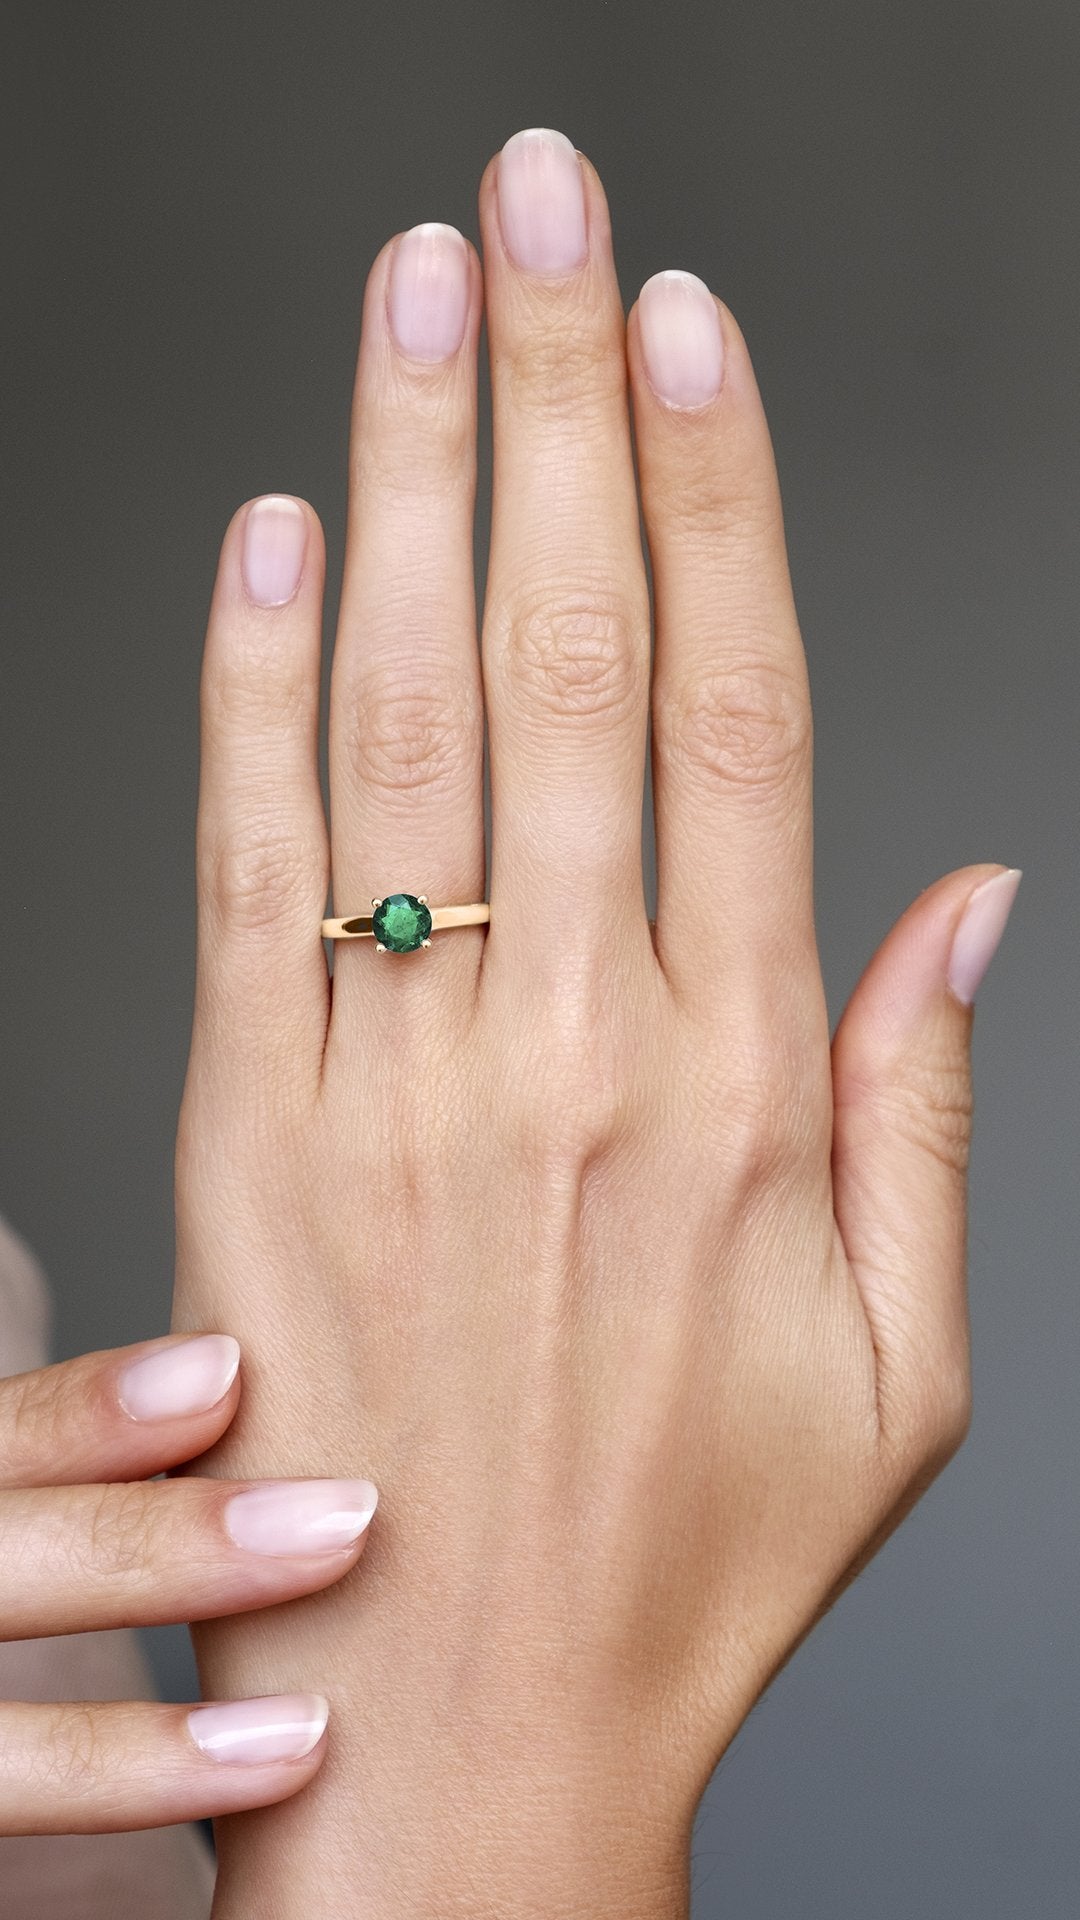 Caroline Ring 18K Rose Gold Emerald